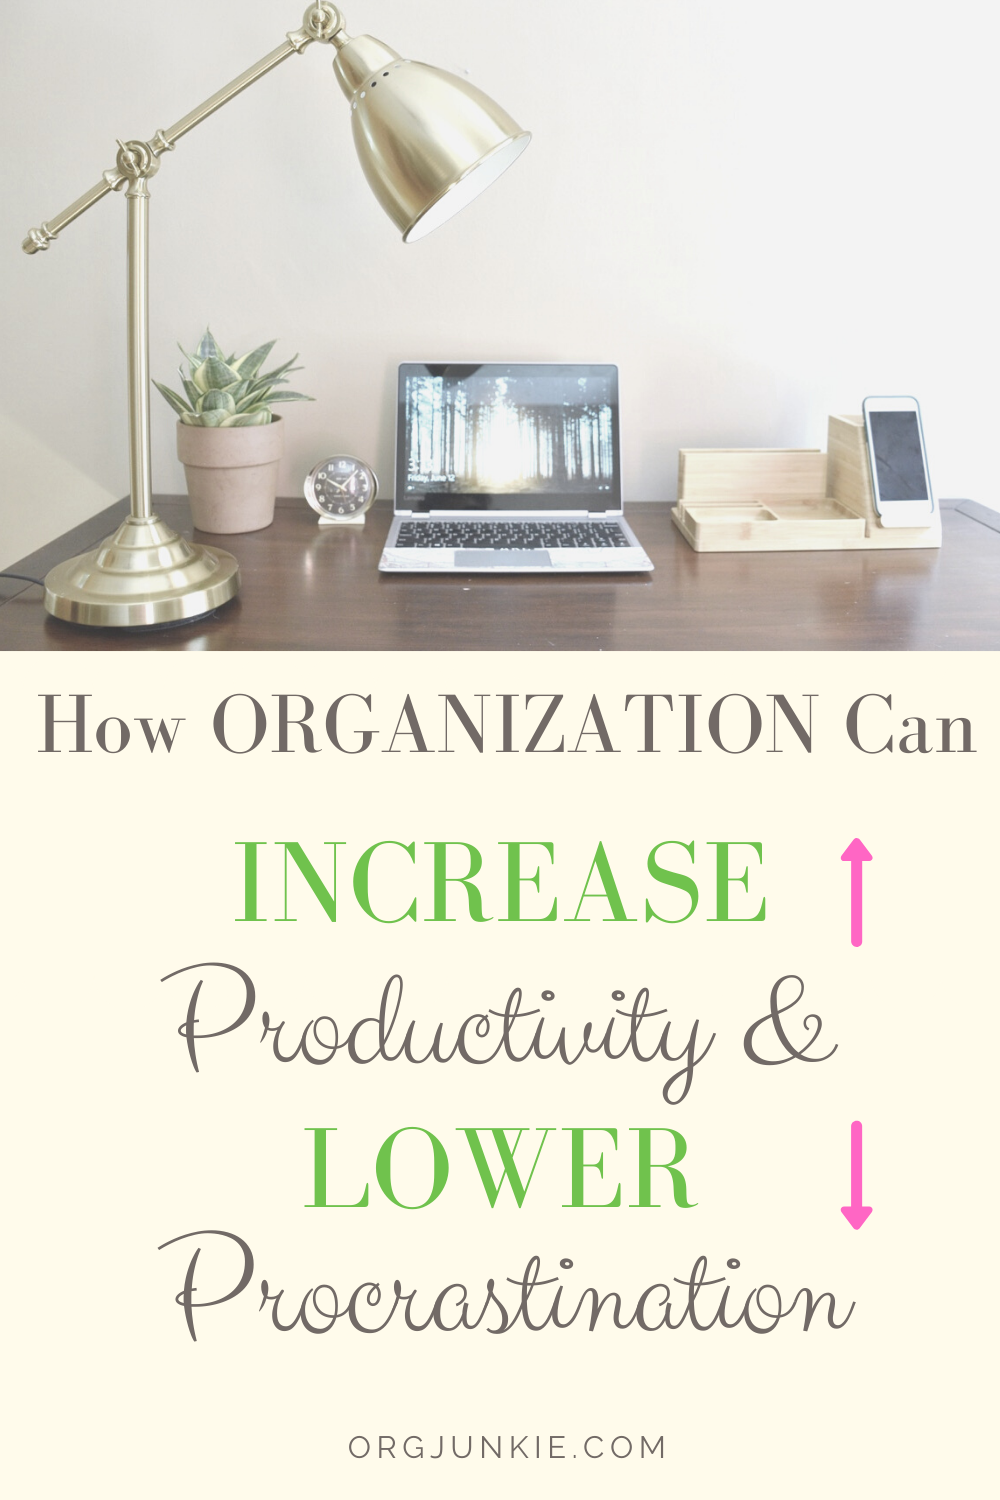 3 Ways Organization Can Increase Productivity & Lower Procrastination